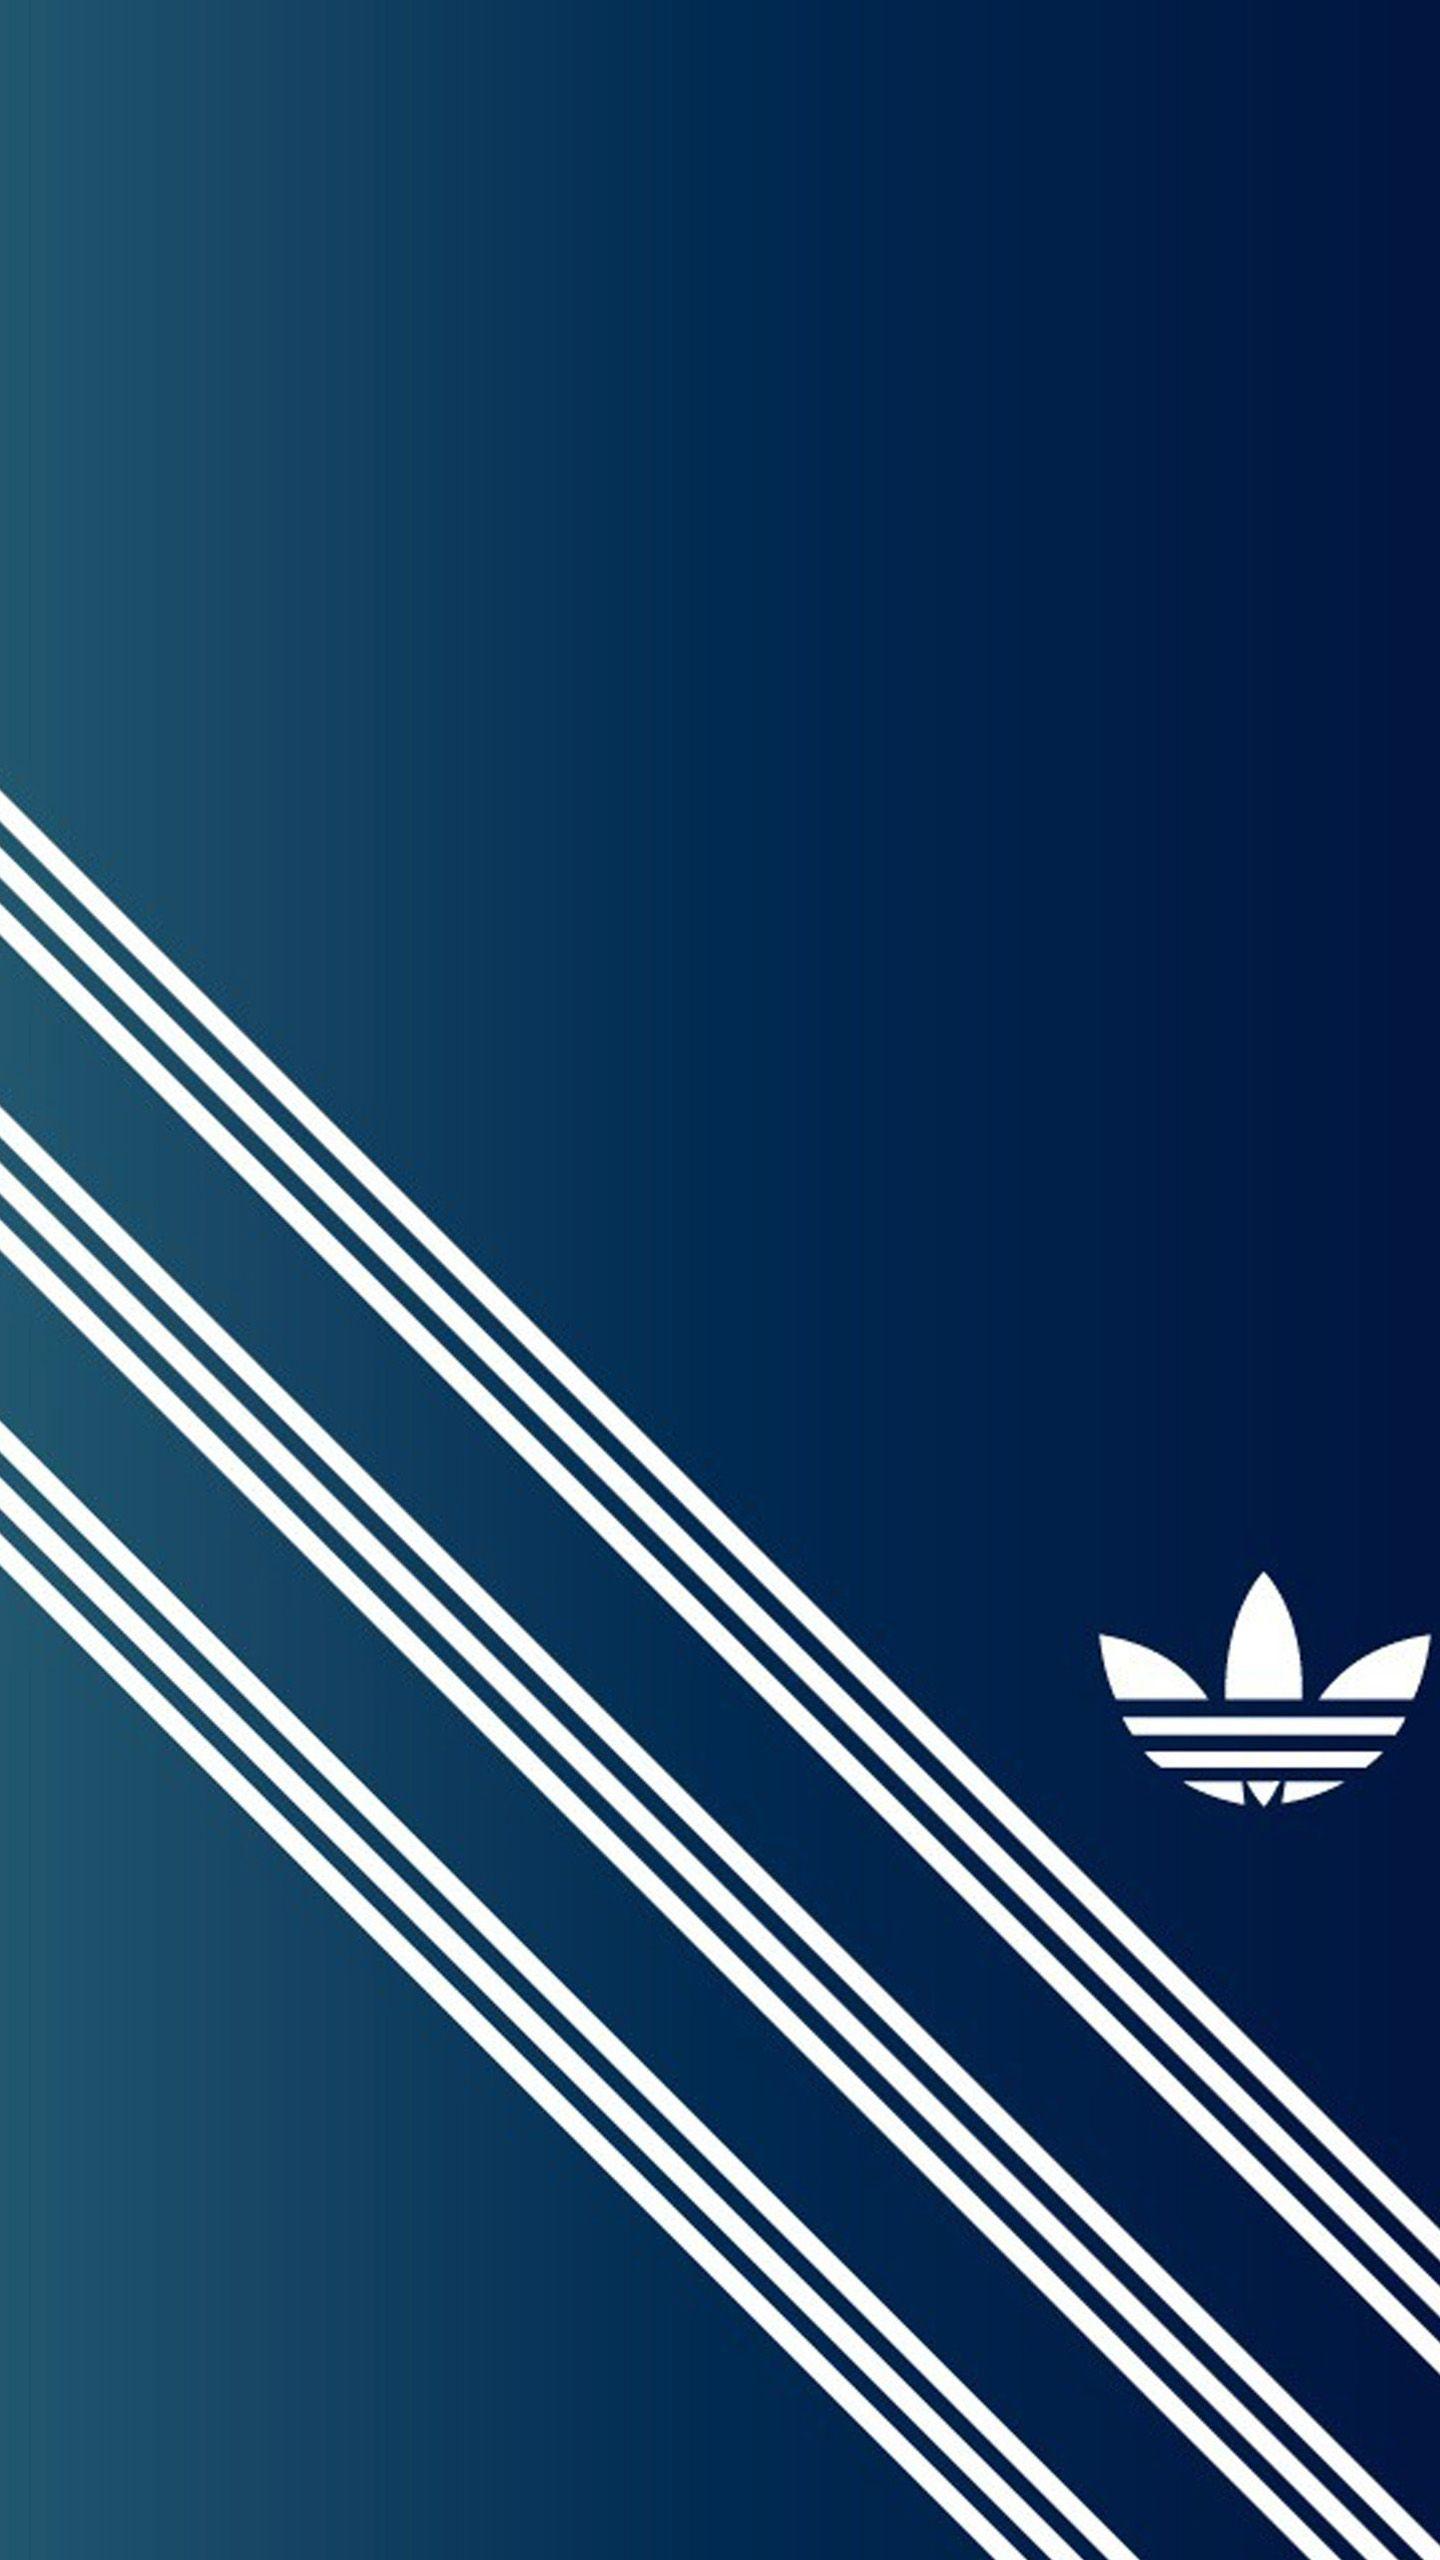 Adidas 2016 Wallpapers - Wallpaper Cave